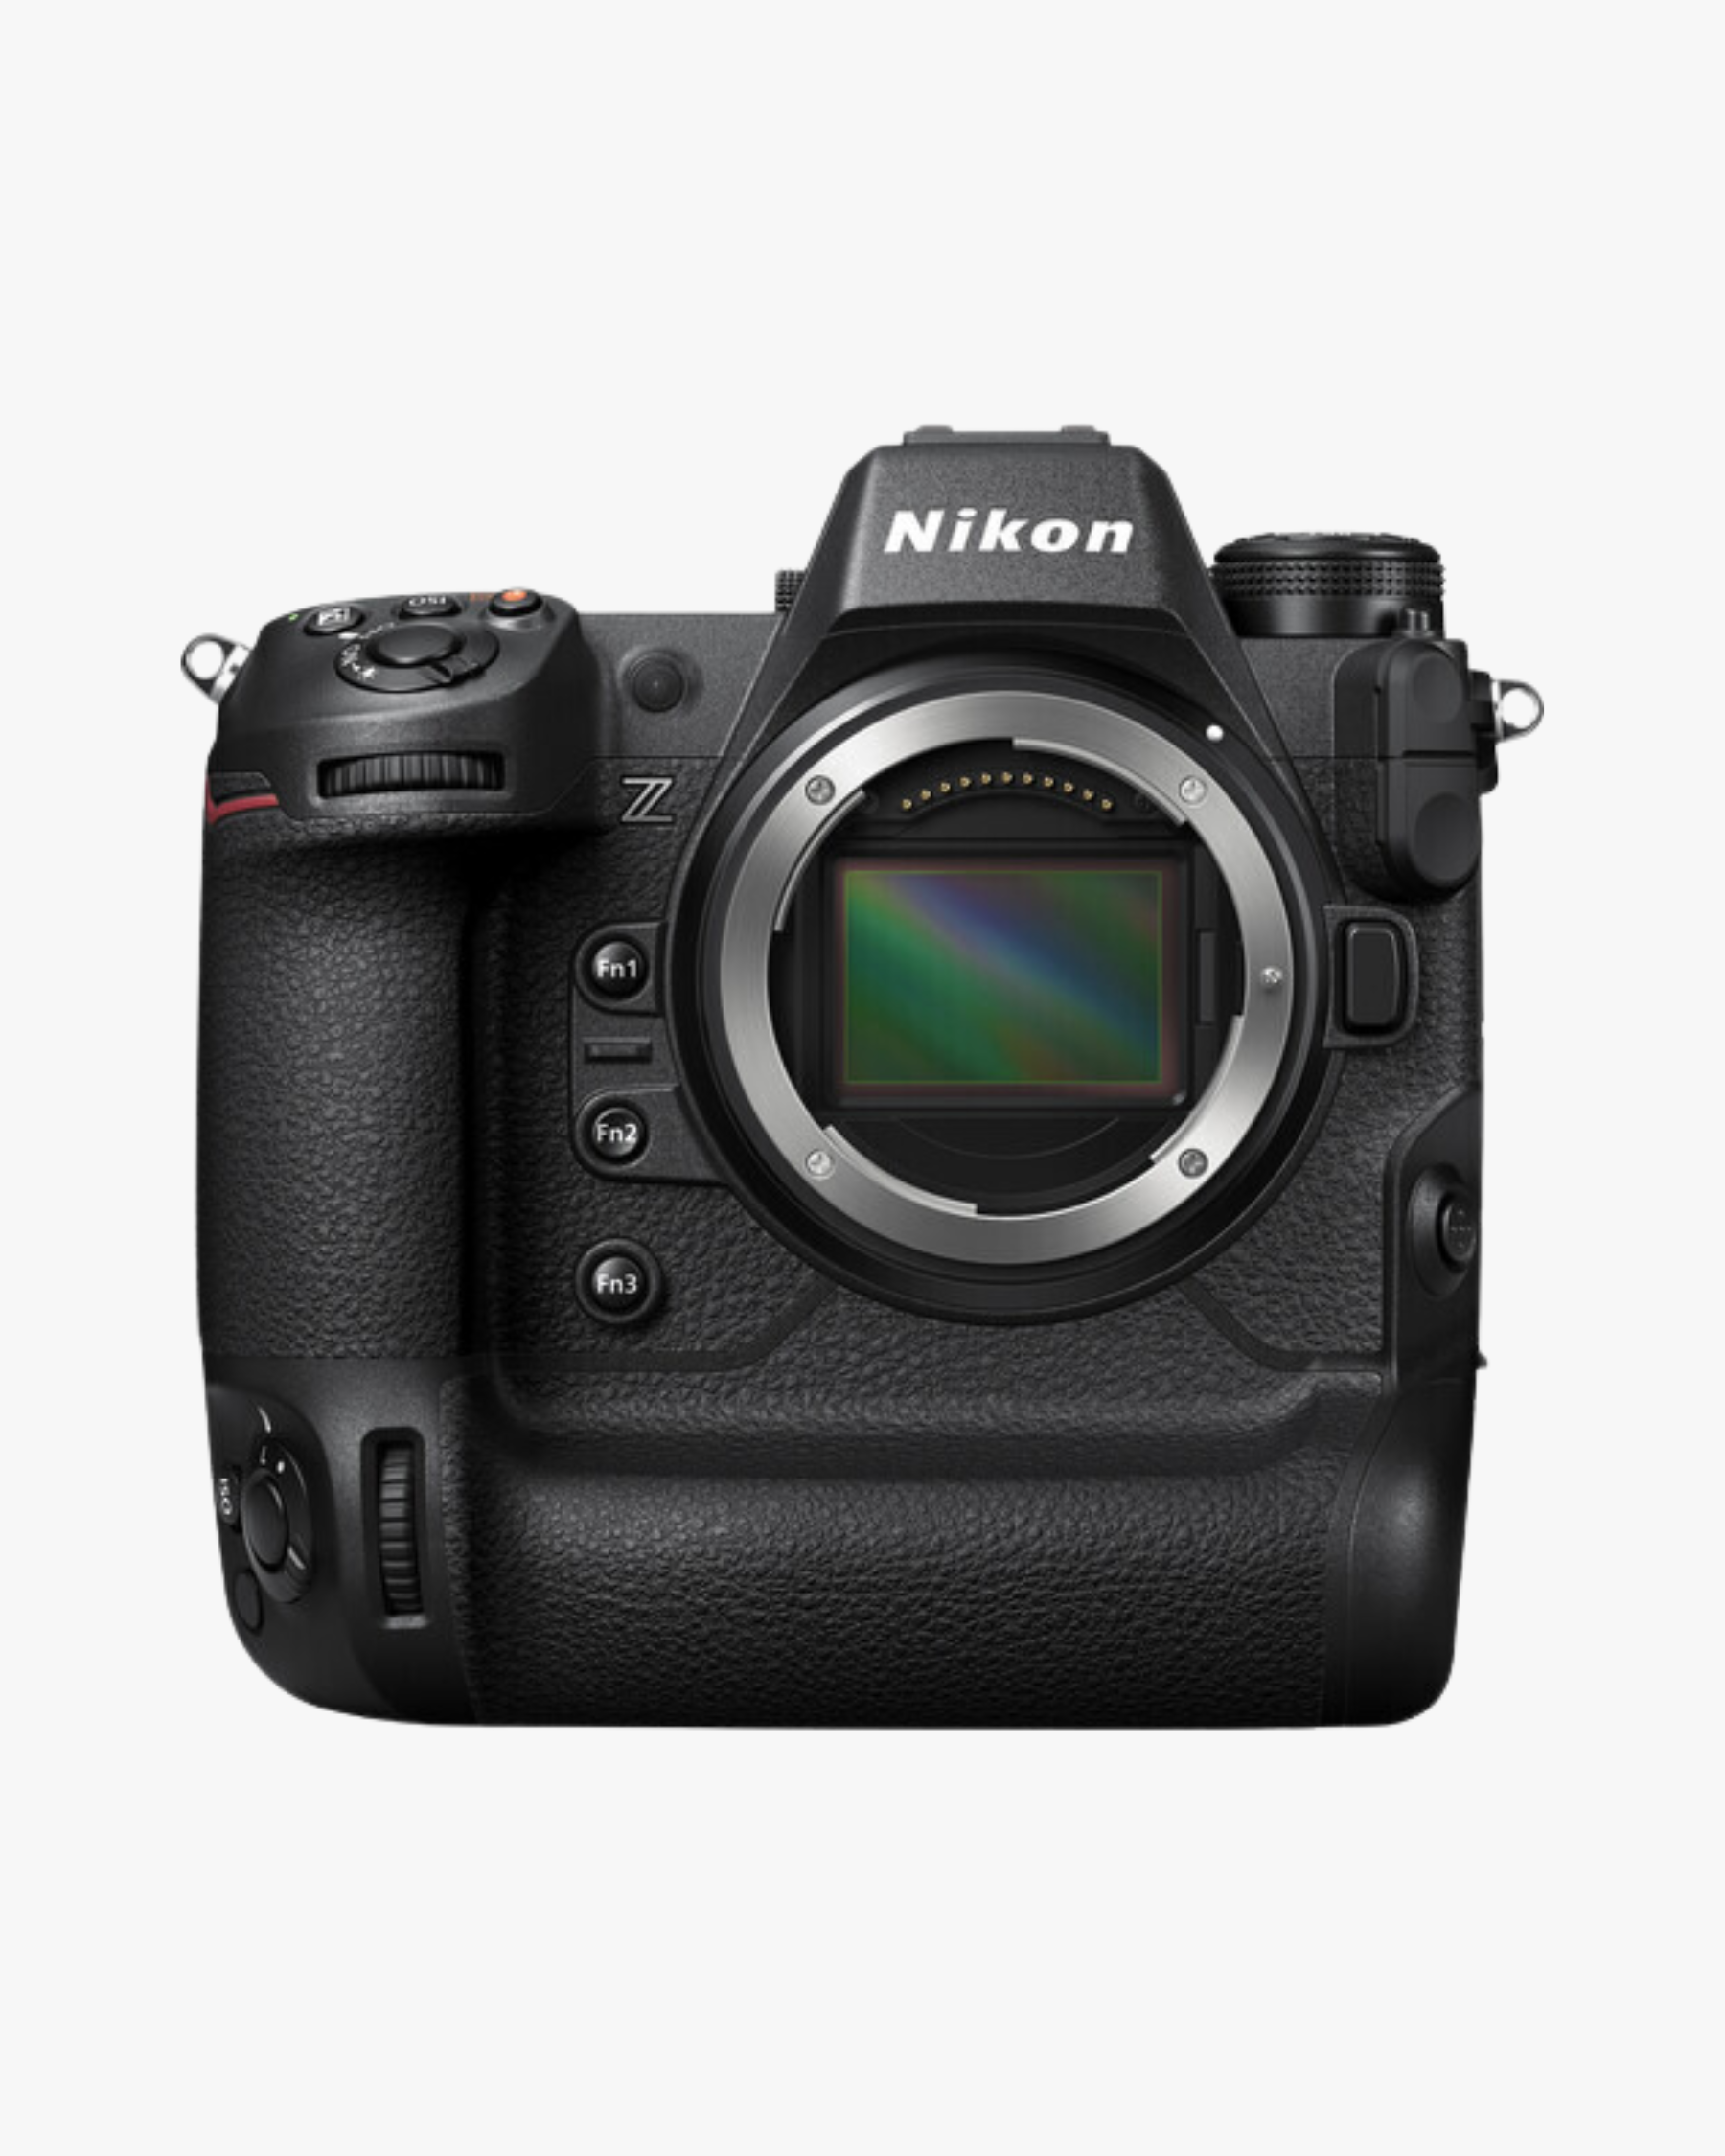 Nikon Z9 body